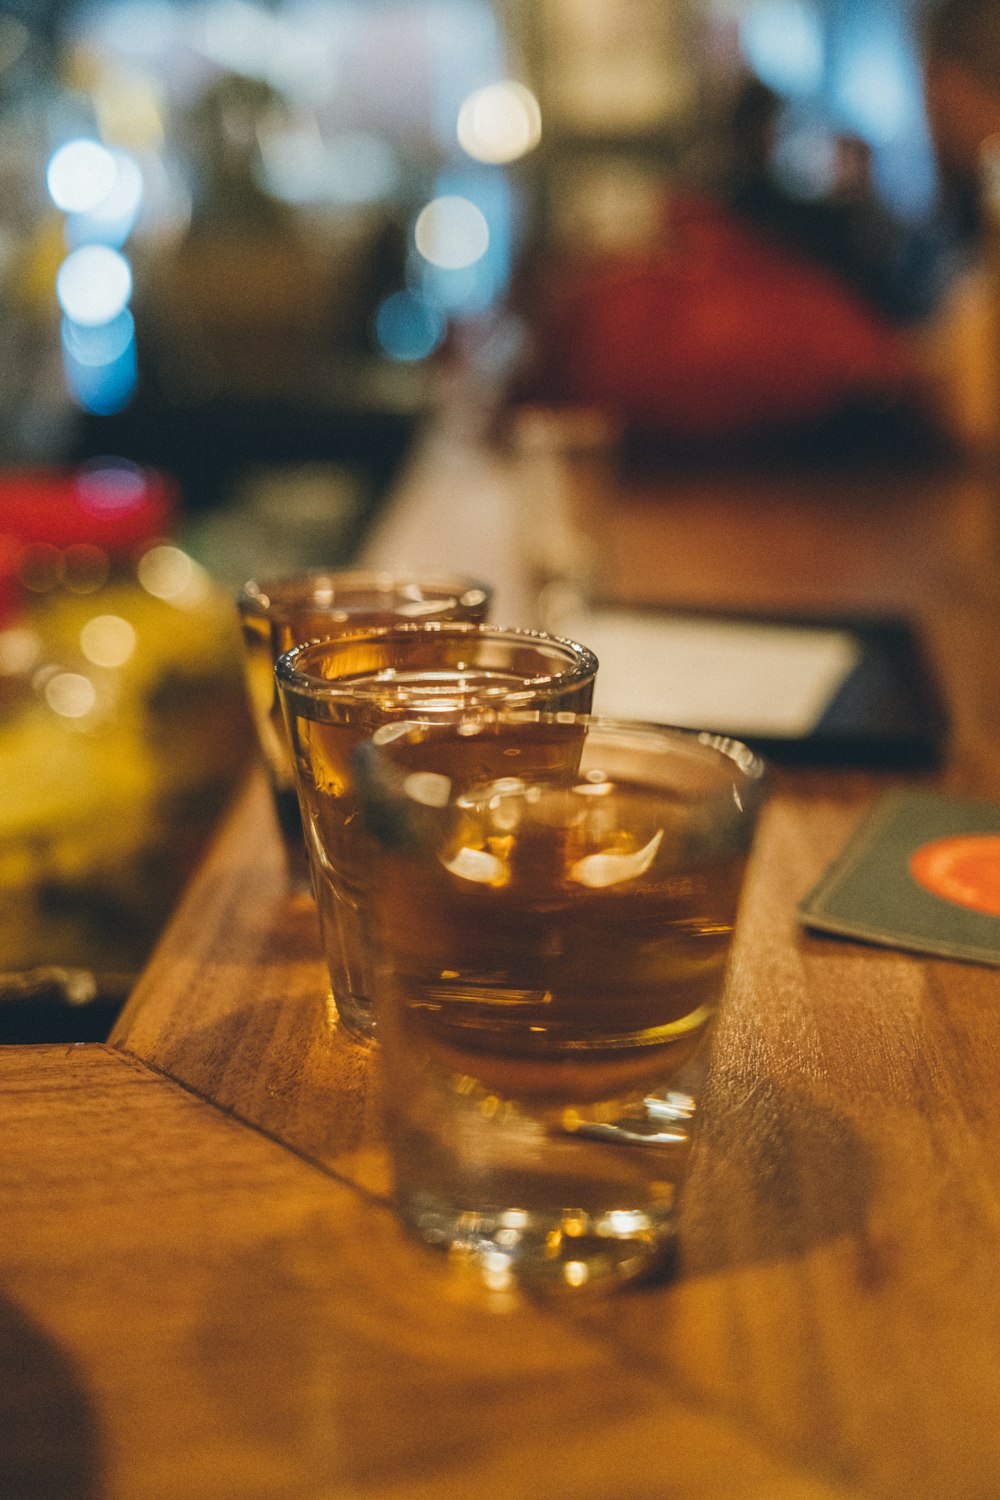 Un primer plano de un vaso de alcohol sobre una mesa